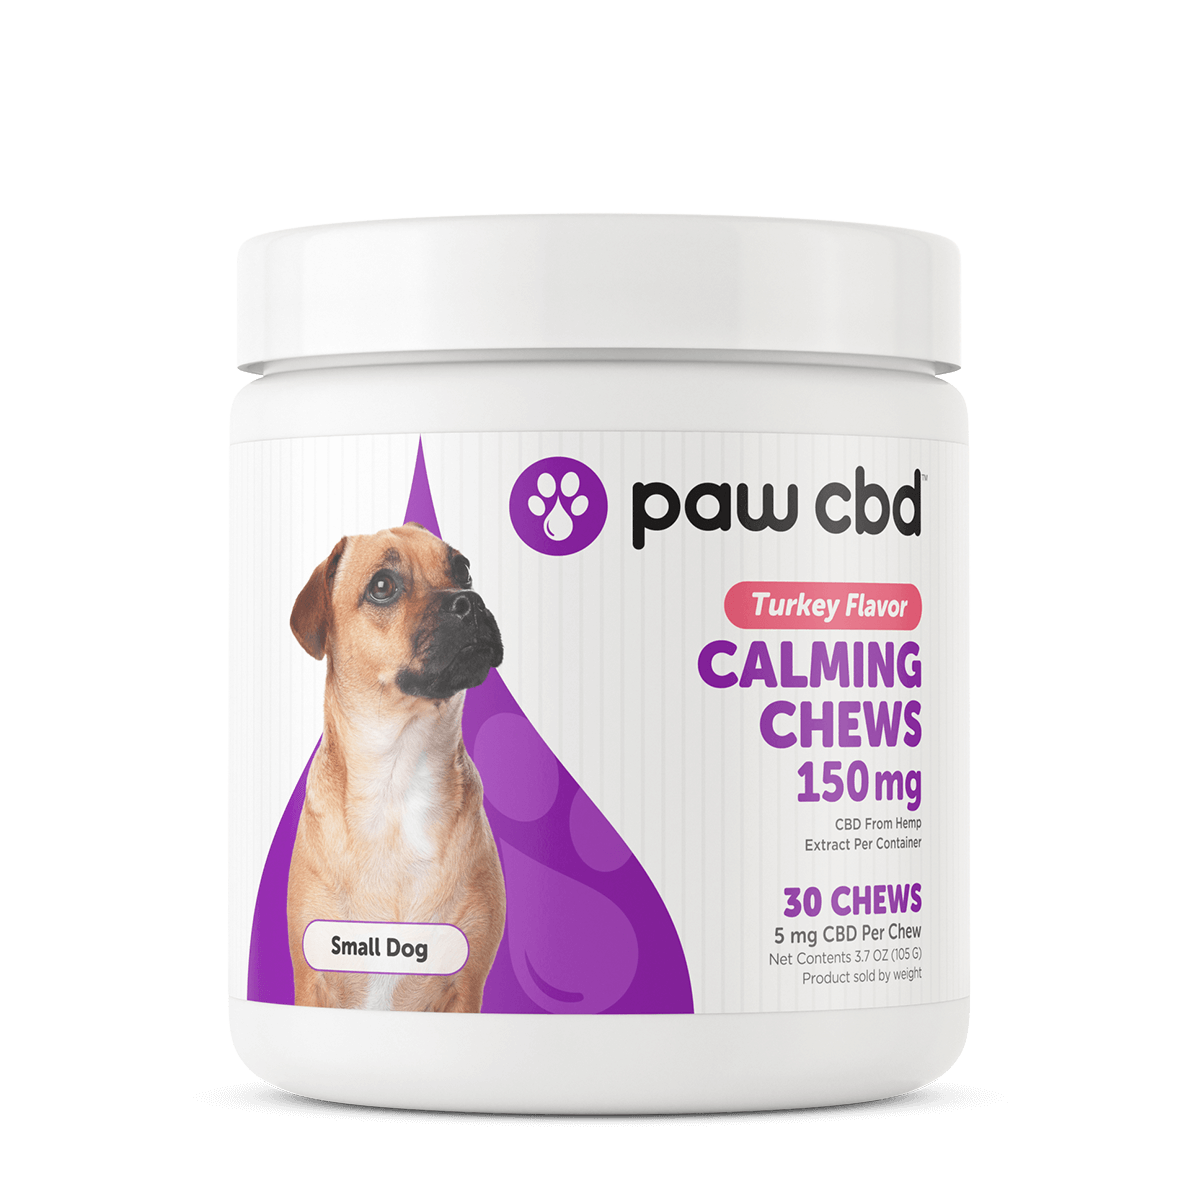 CbdMD Pet CBD Calming Soft Chews for Dogs Turkey 150mg, 30 Count